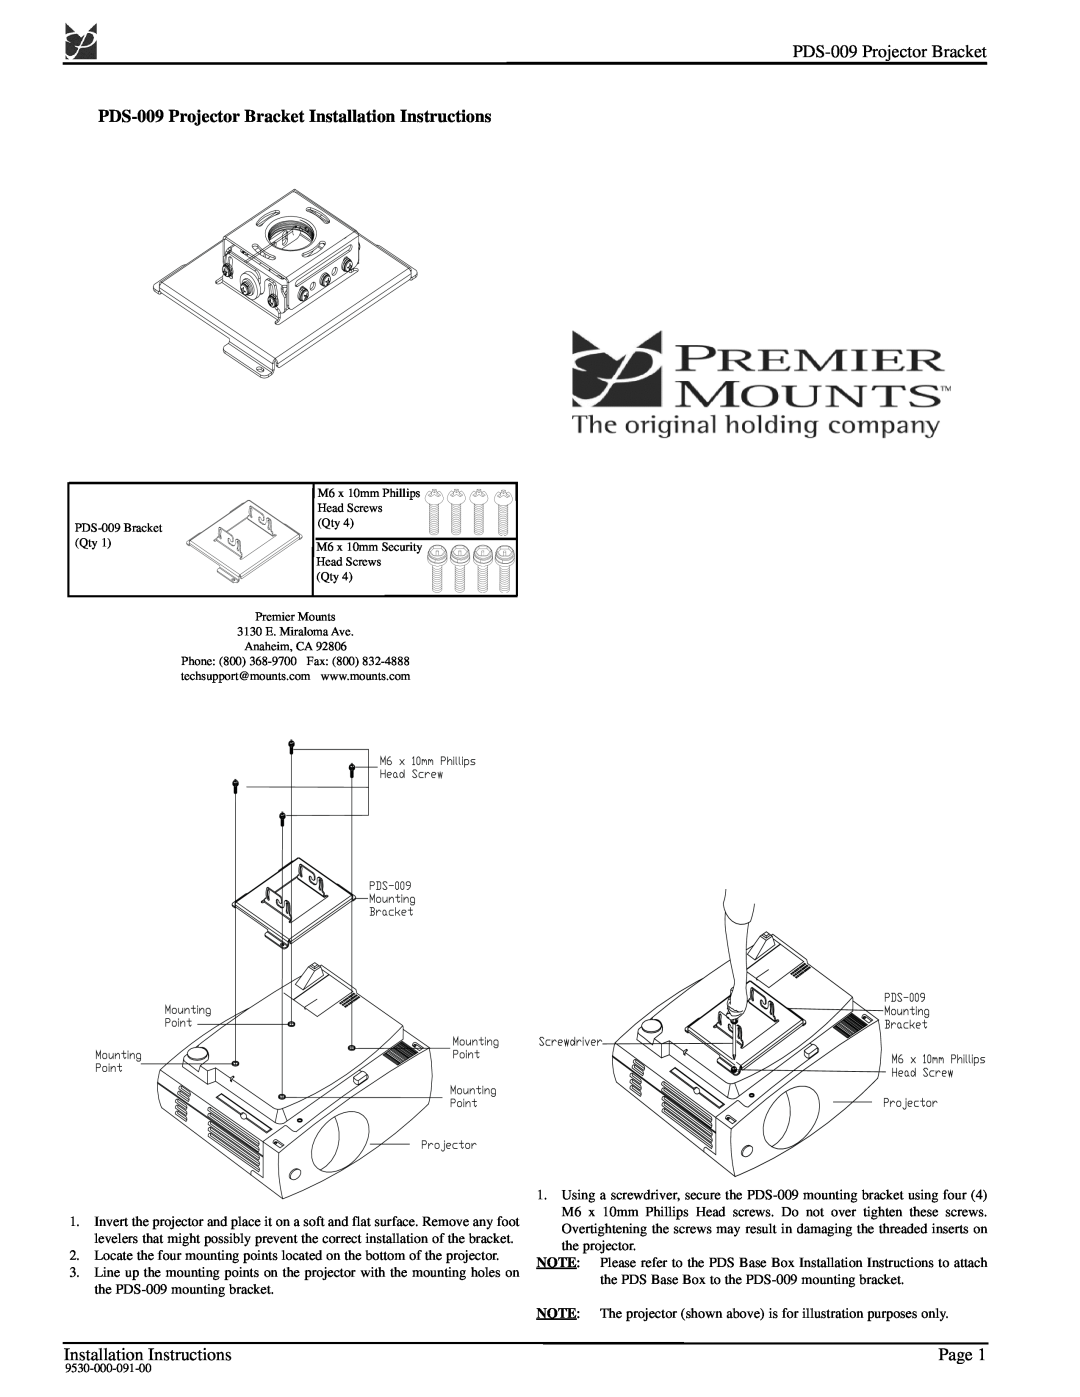 Premier Mounts installation instructions PDS-009 Projector Bracket Installation Instructions, Page 